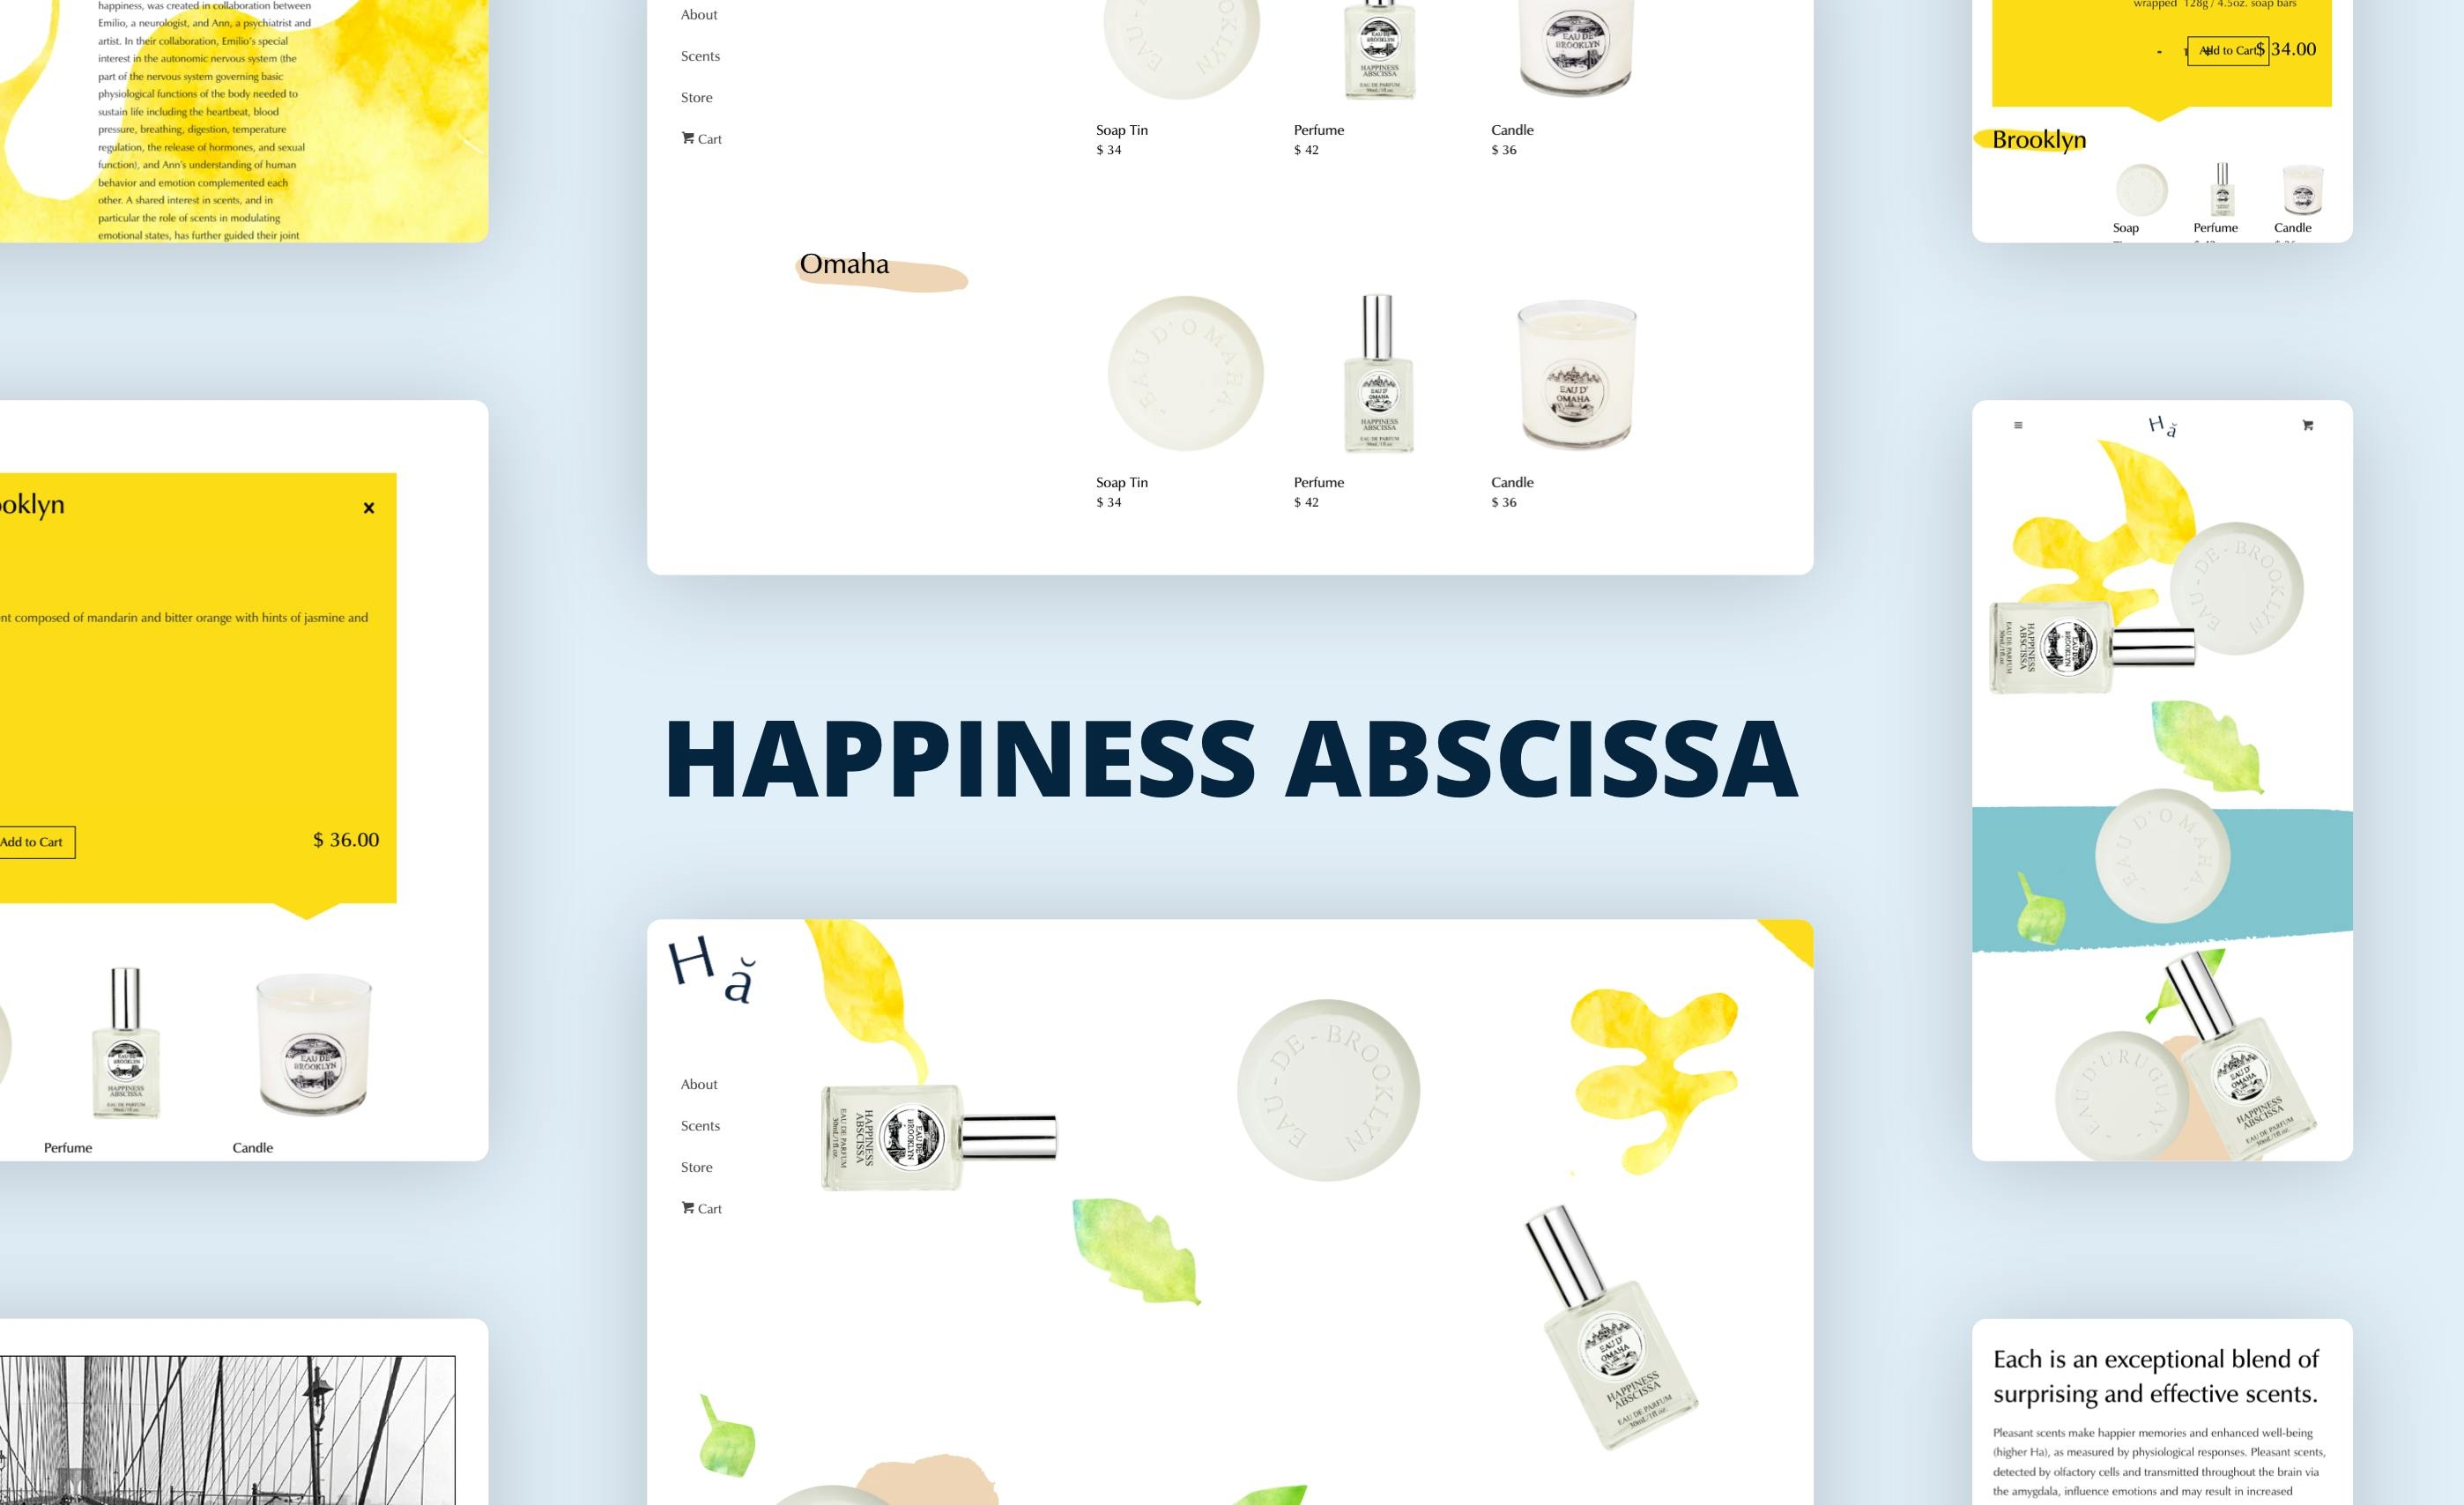 Happiness Abscissa